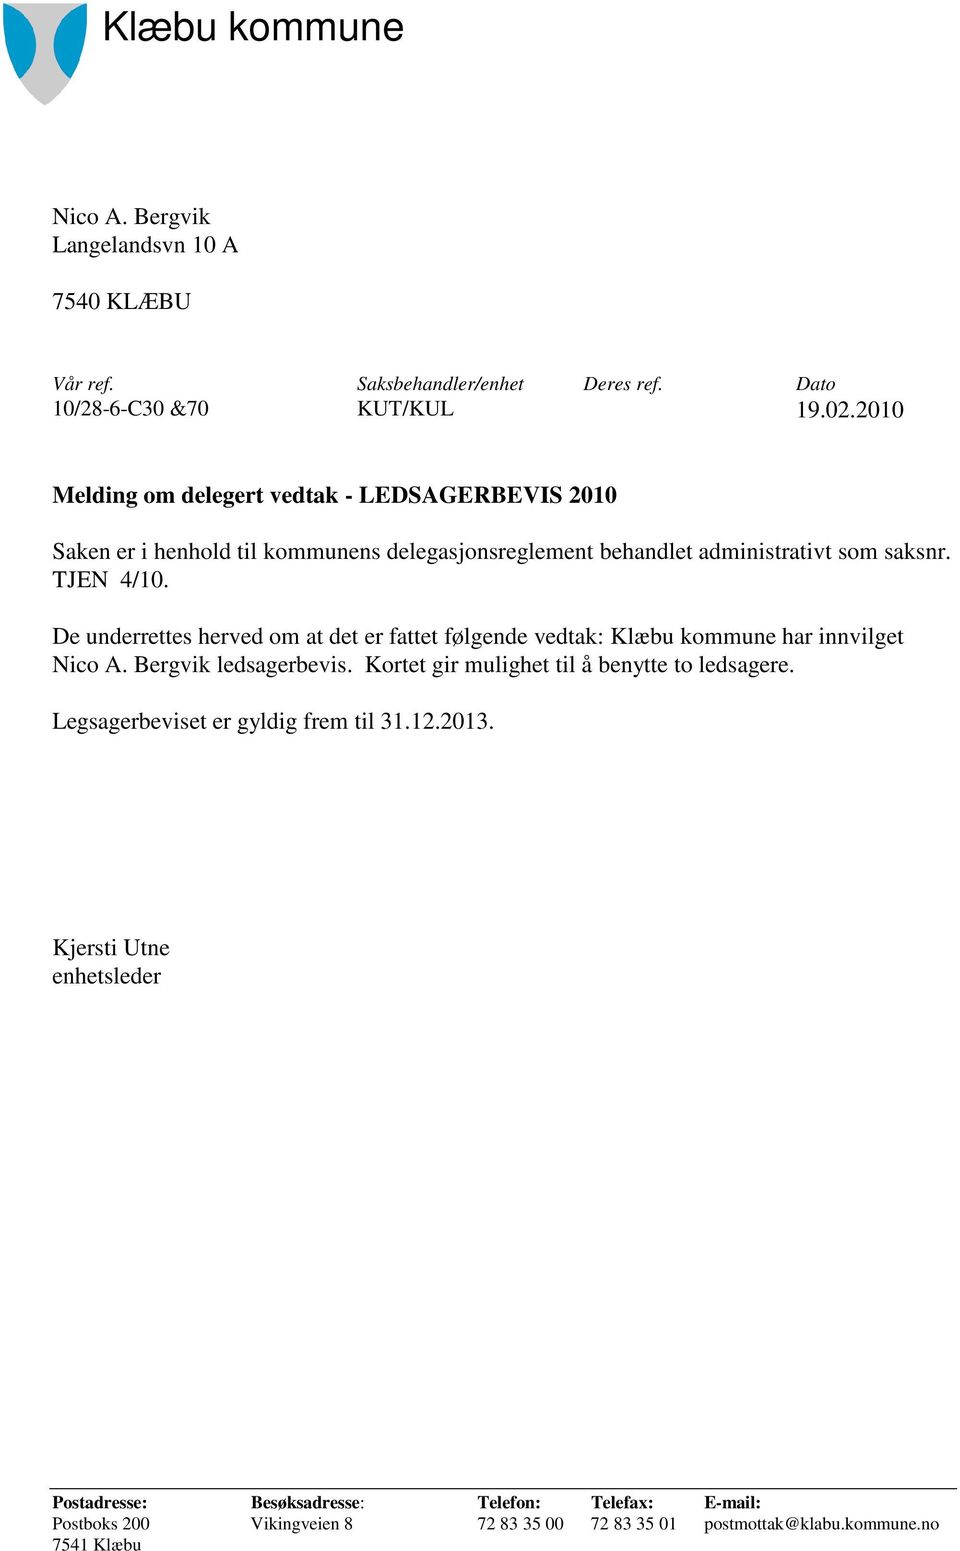 De underrettes herved om at det er fattet følgende vedtak: Klæbu kommune har innvilget Nico A. Bergvik ledsagerbevis. Kortet gir mulighet til å benytte to ledsagere.